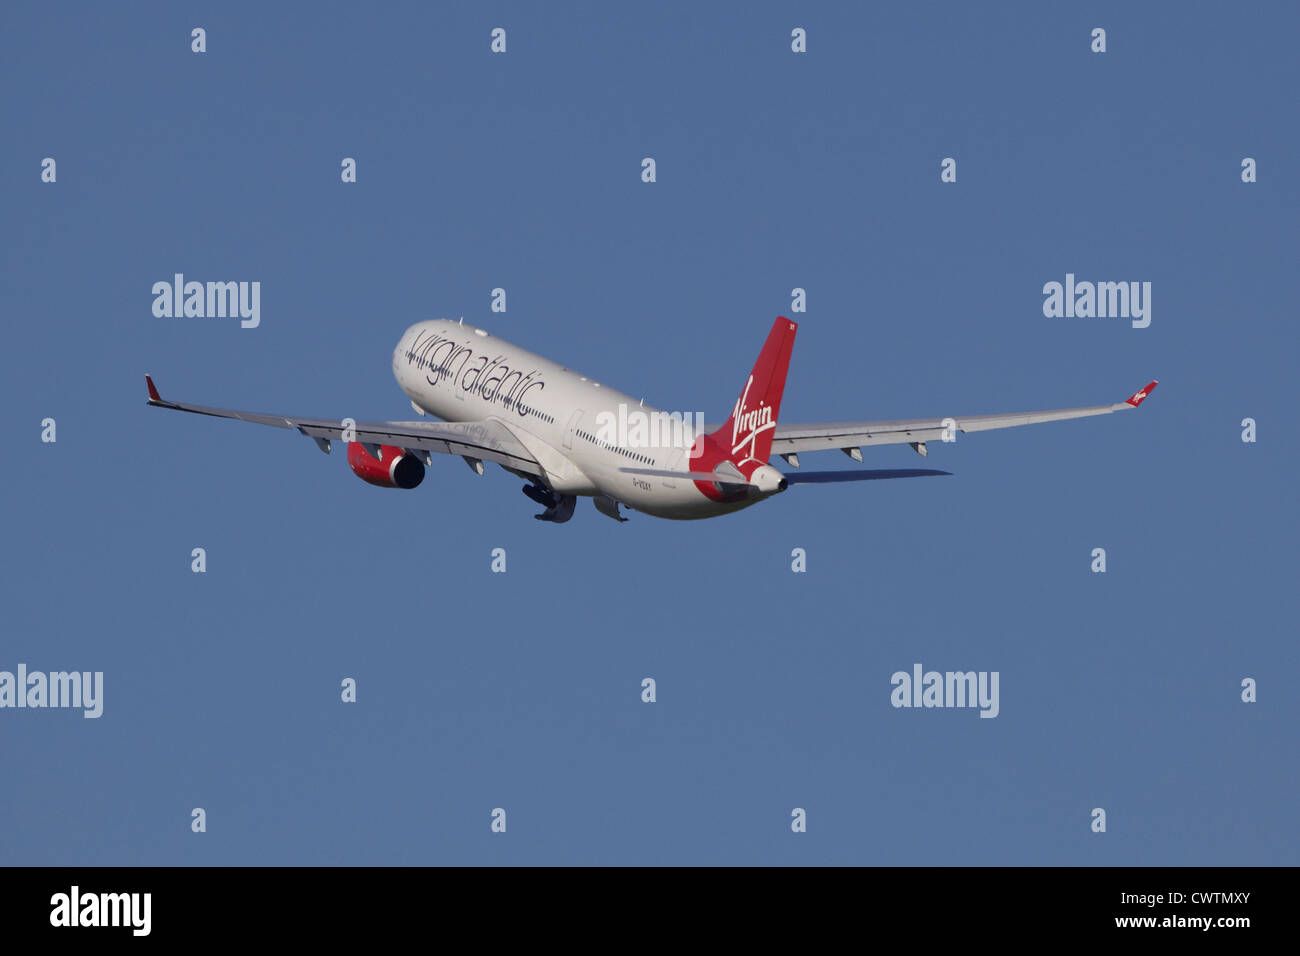 Virgin Atlantic Airbus A330 take off at Manchester Airport G-VSXY Stock Photo